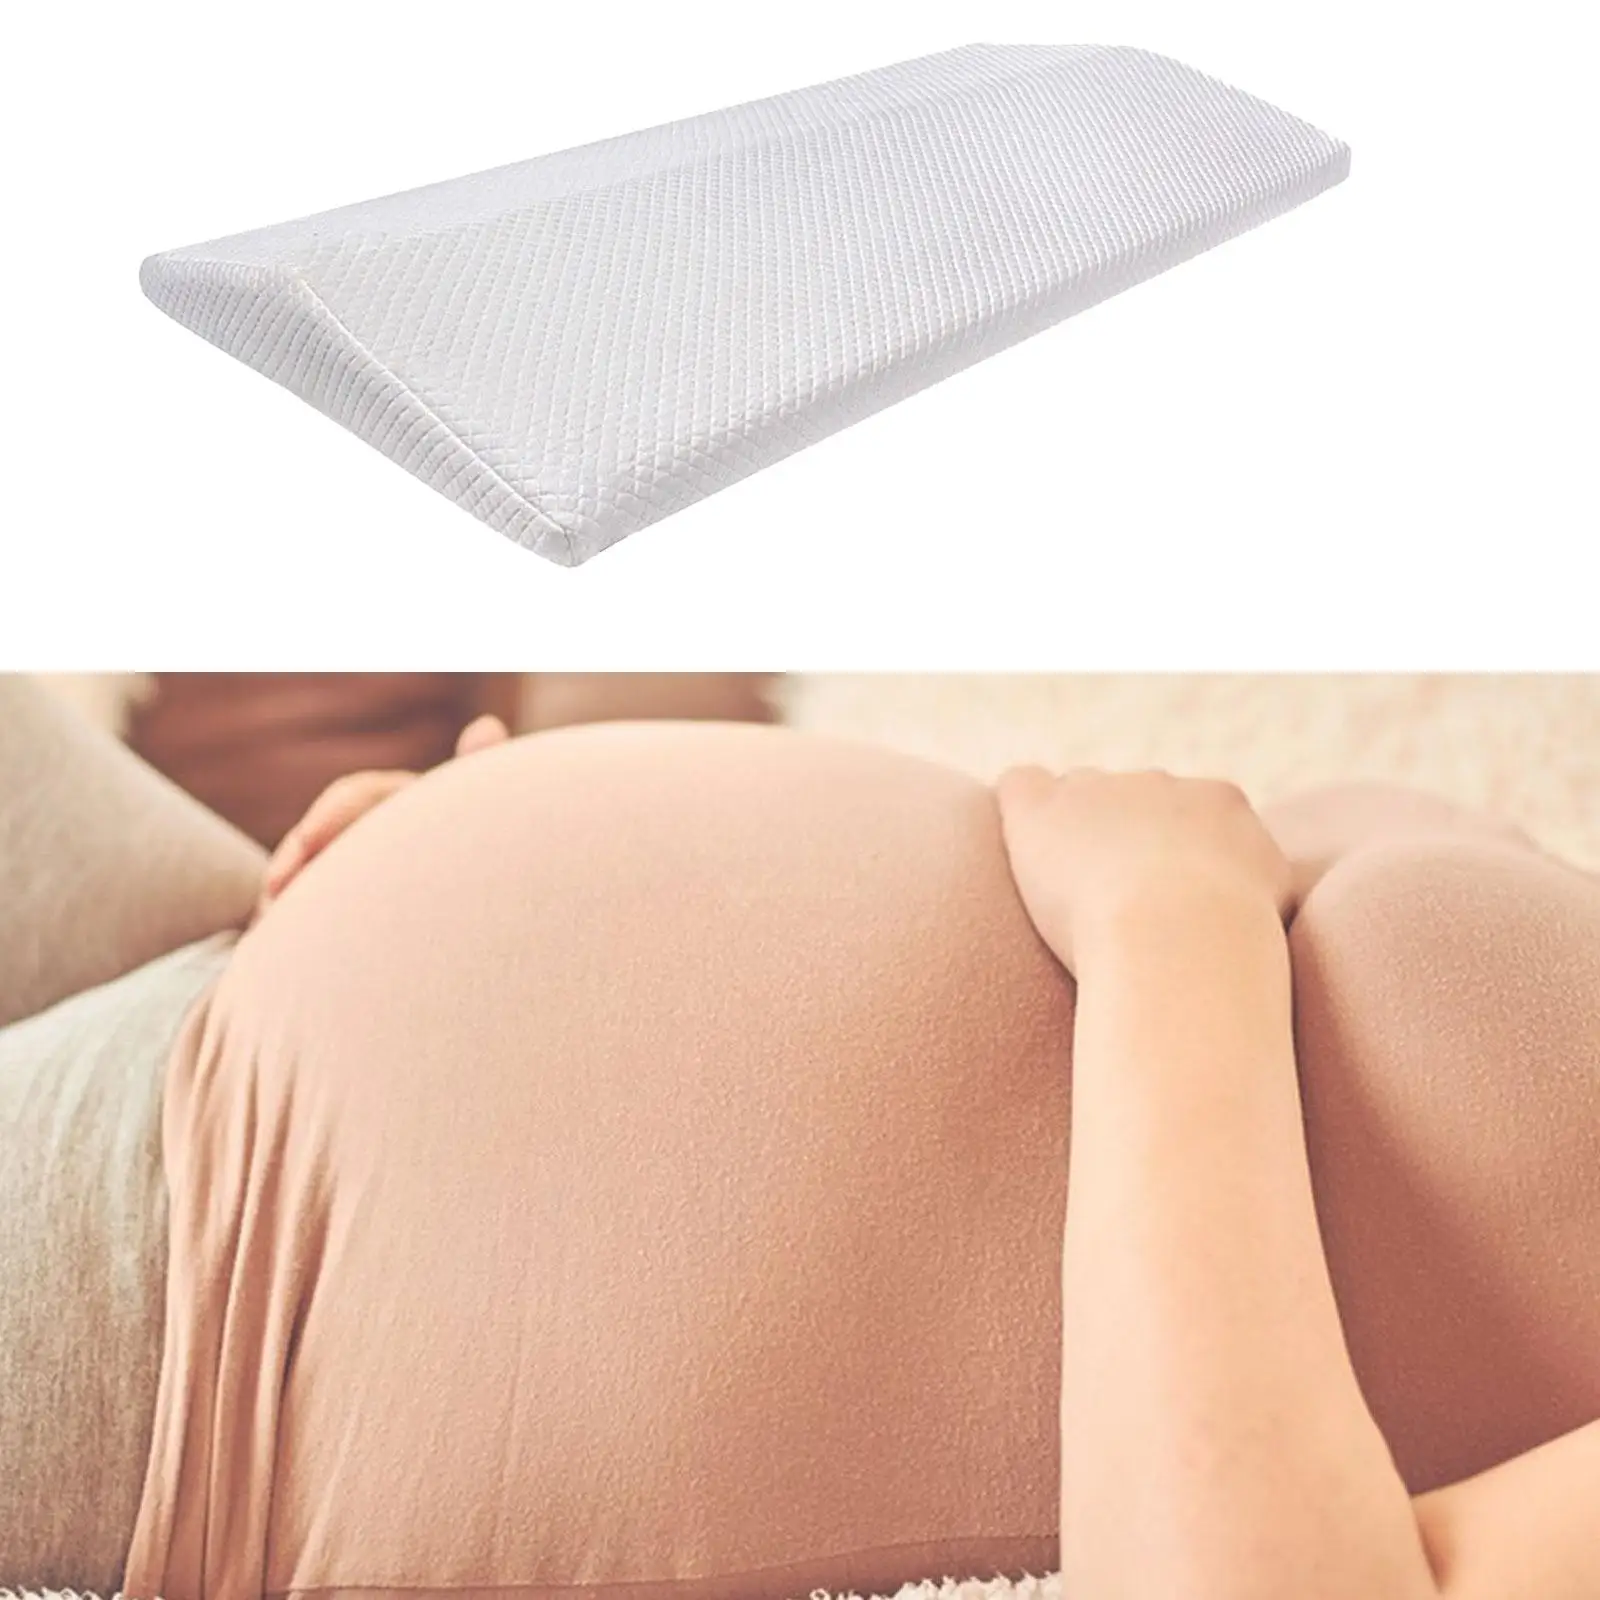 Waist Support Cushion Ergonomic Side Sleepers Wedge Bolster Waist Pillow for Hip Bed